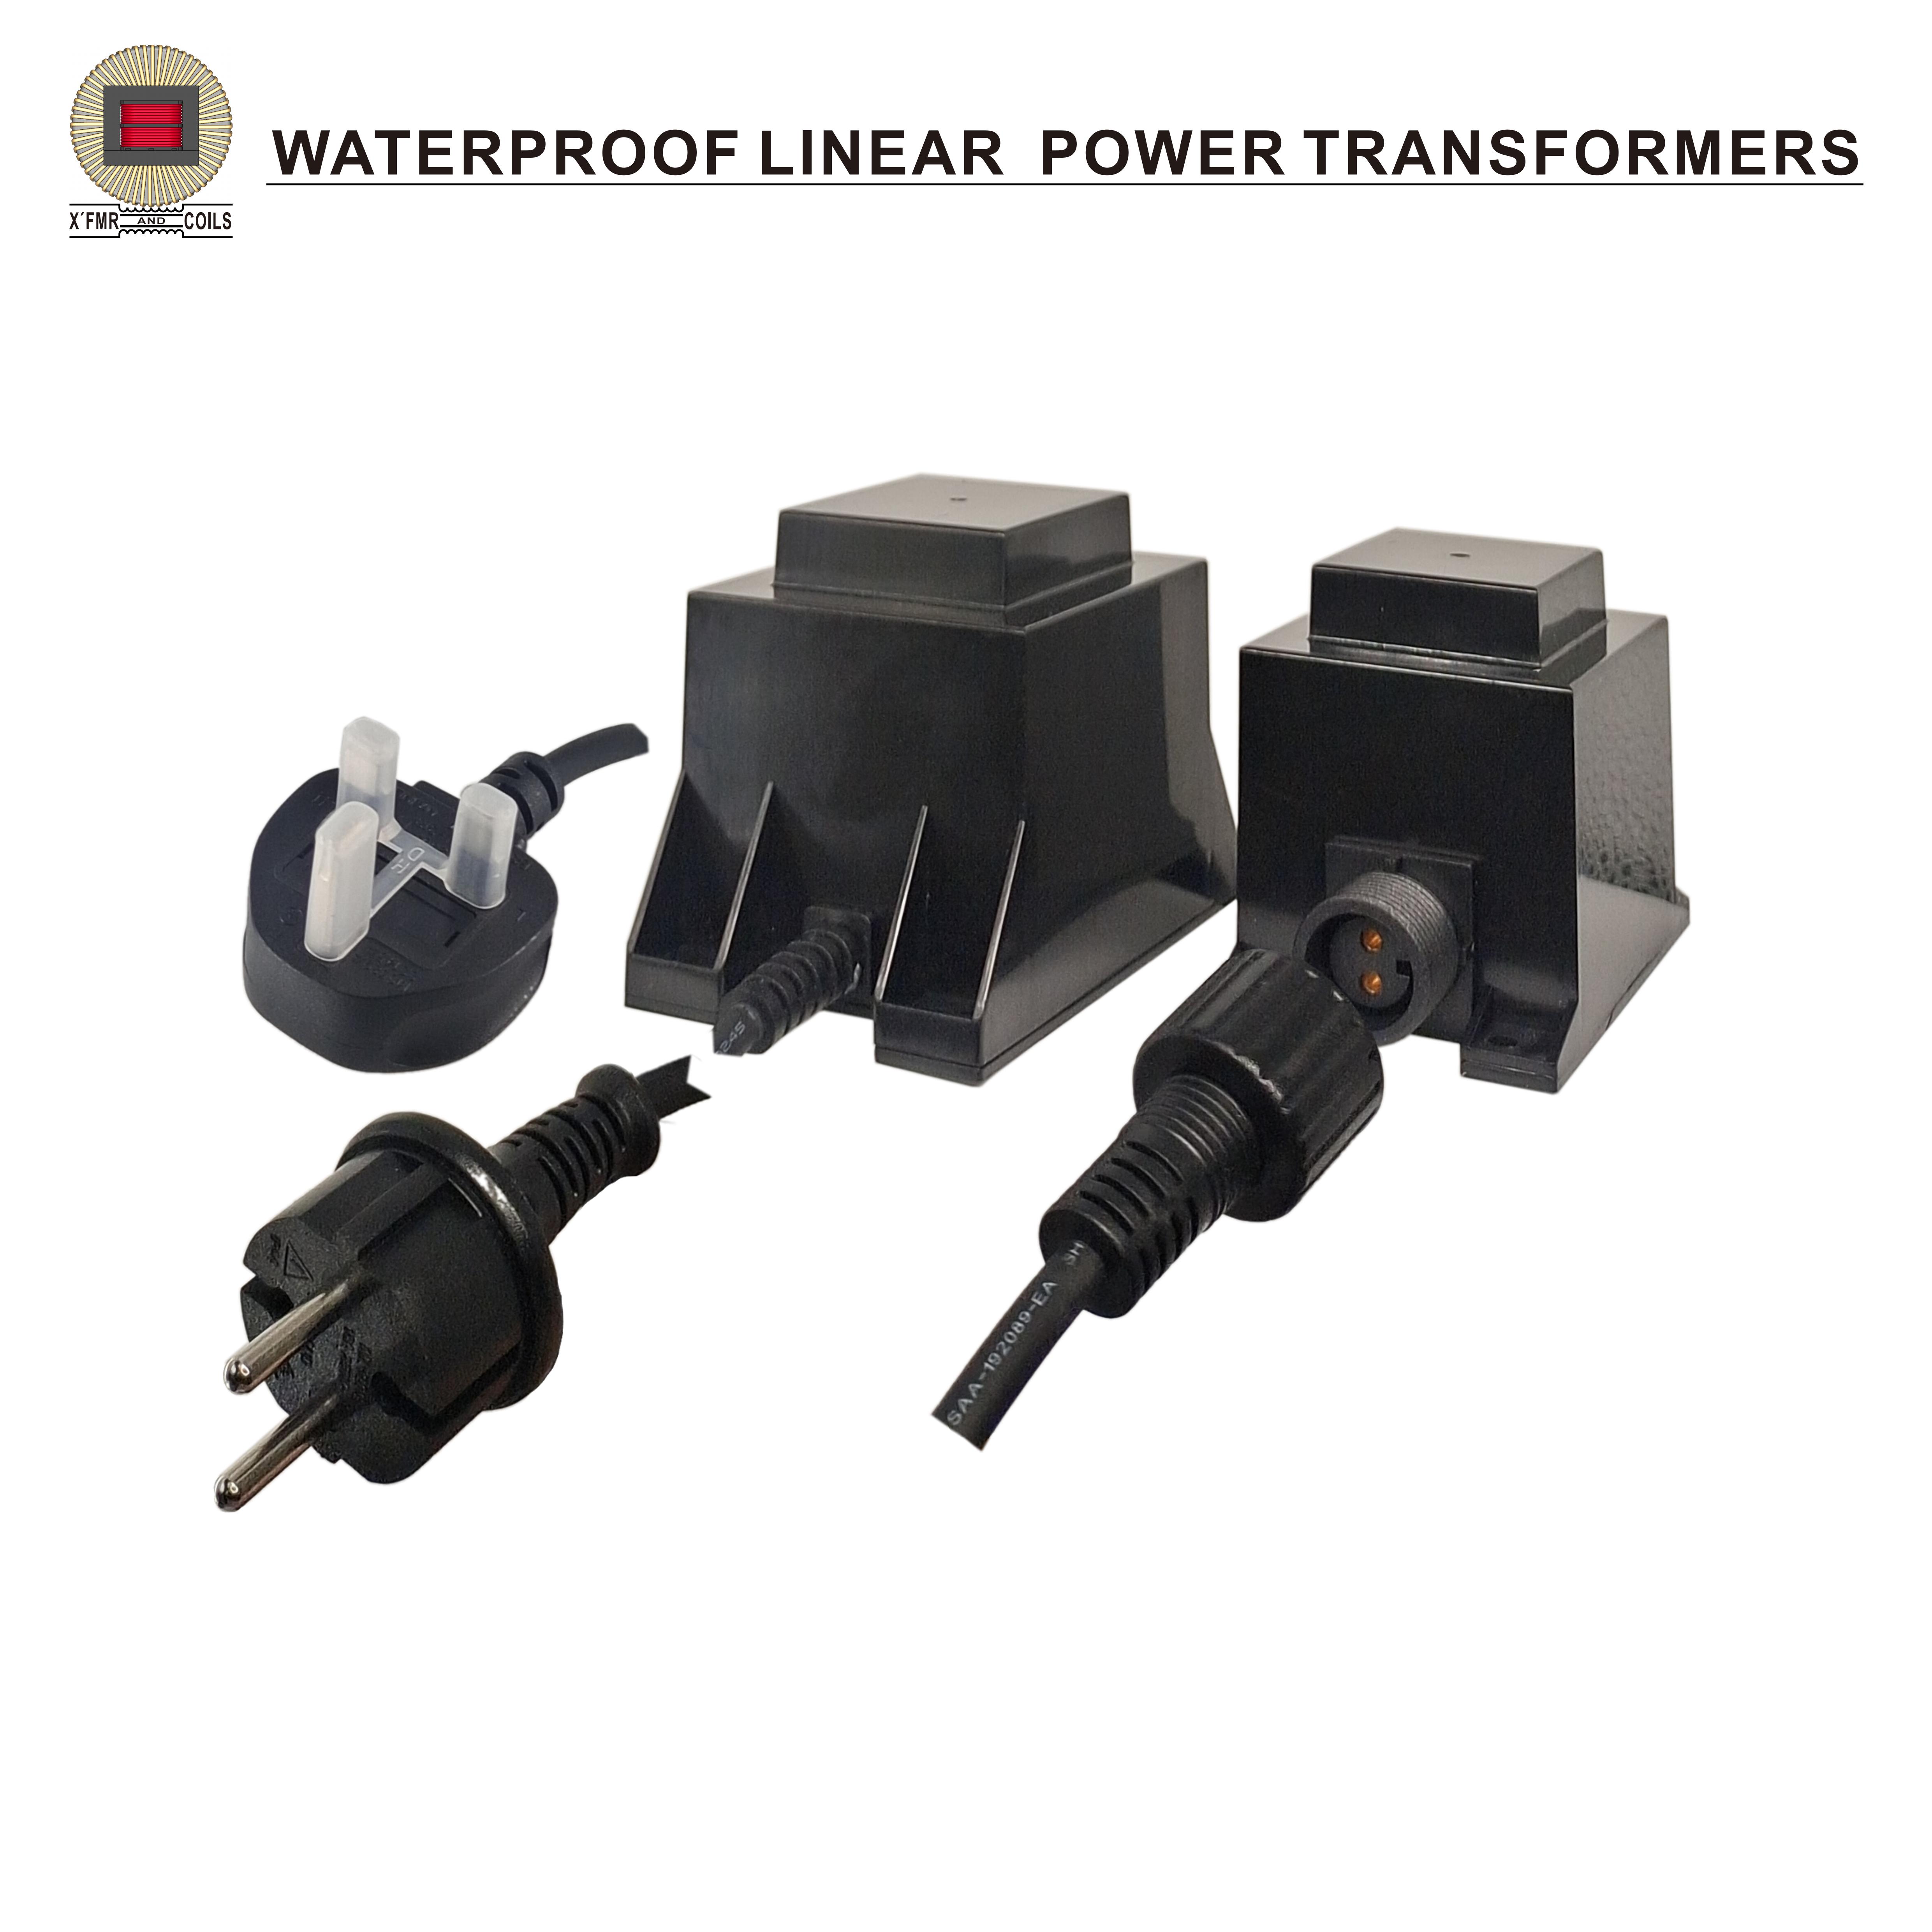 Waterproof Linear Power Transformers WLPT-01 Series